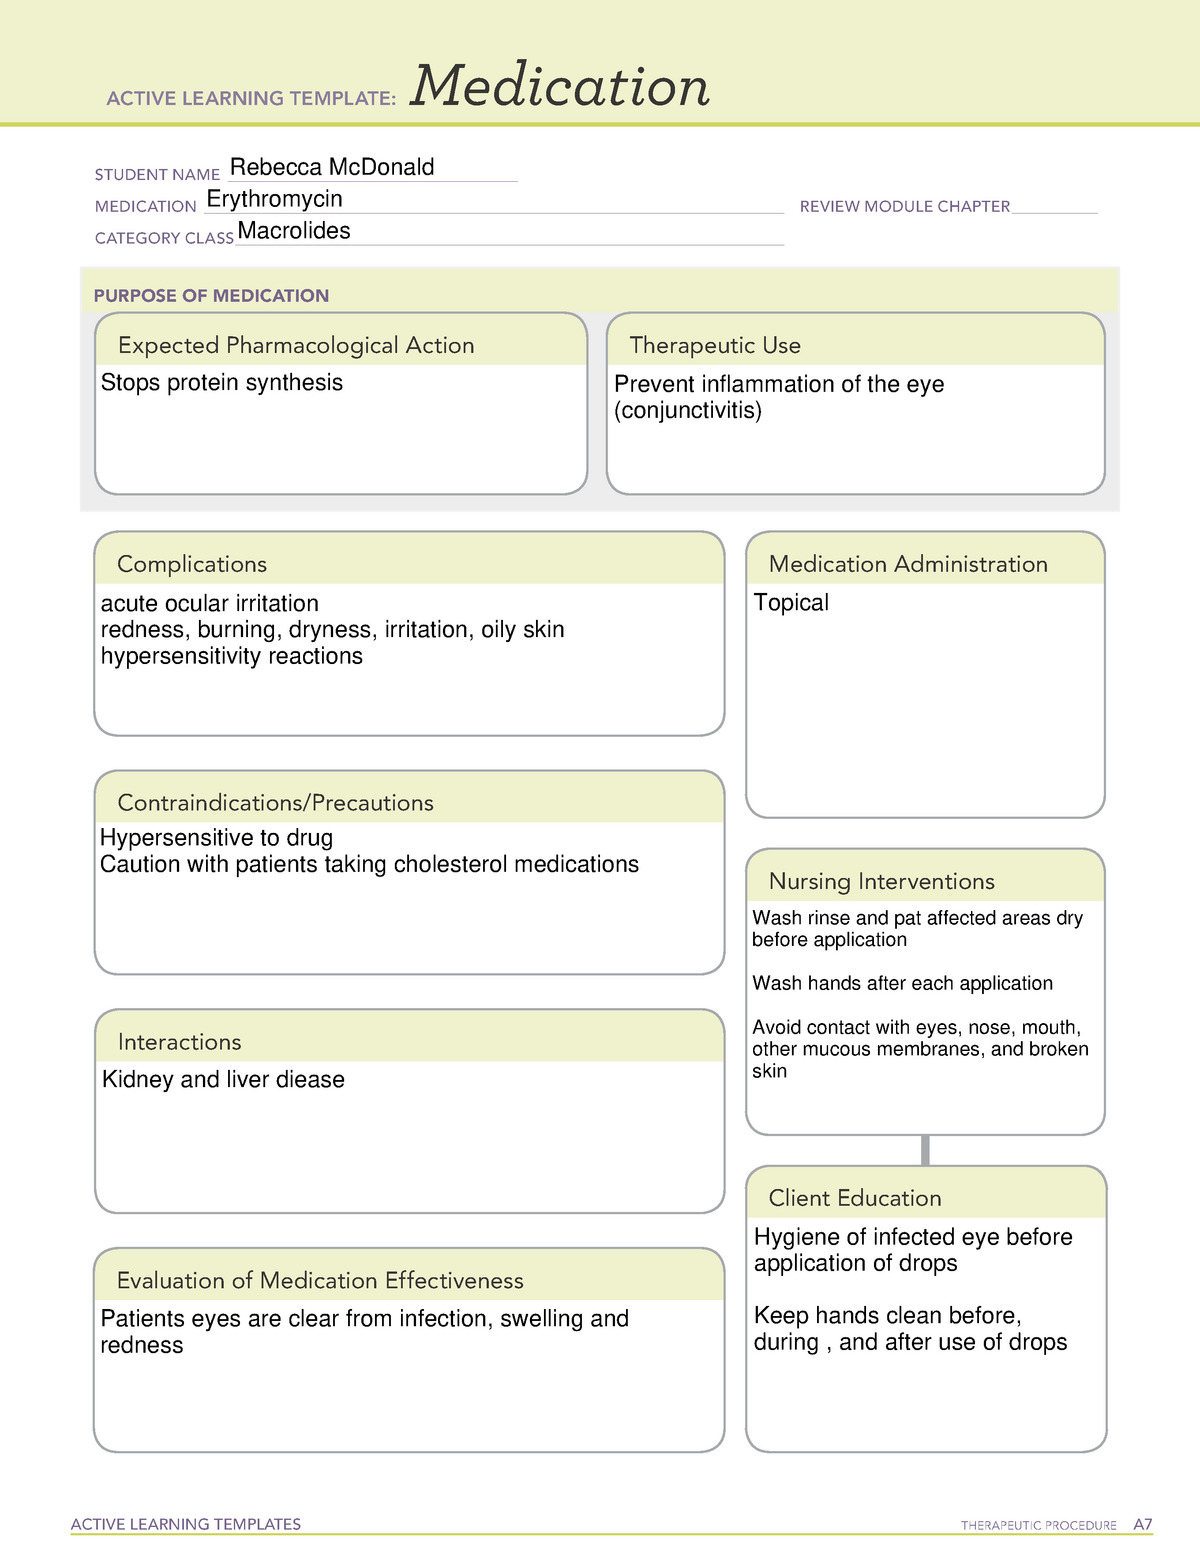 erythromycin-ati-medication-template